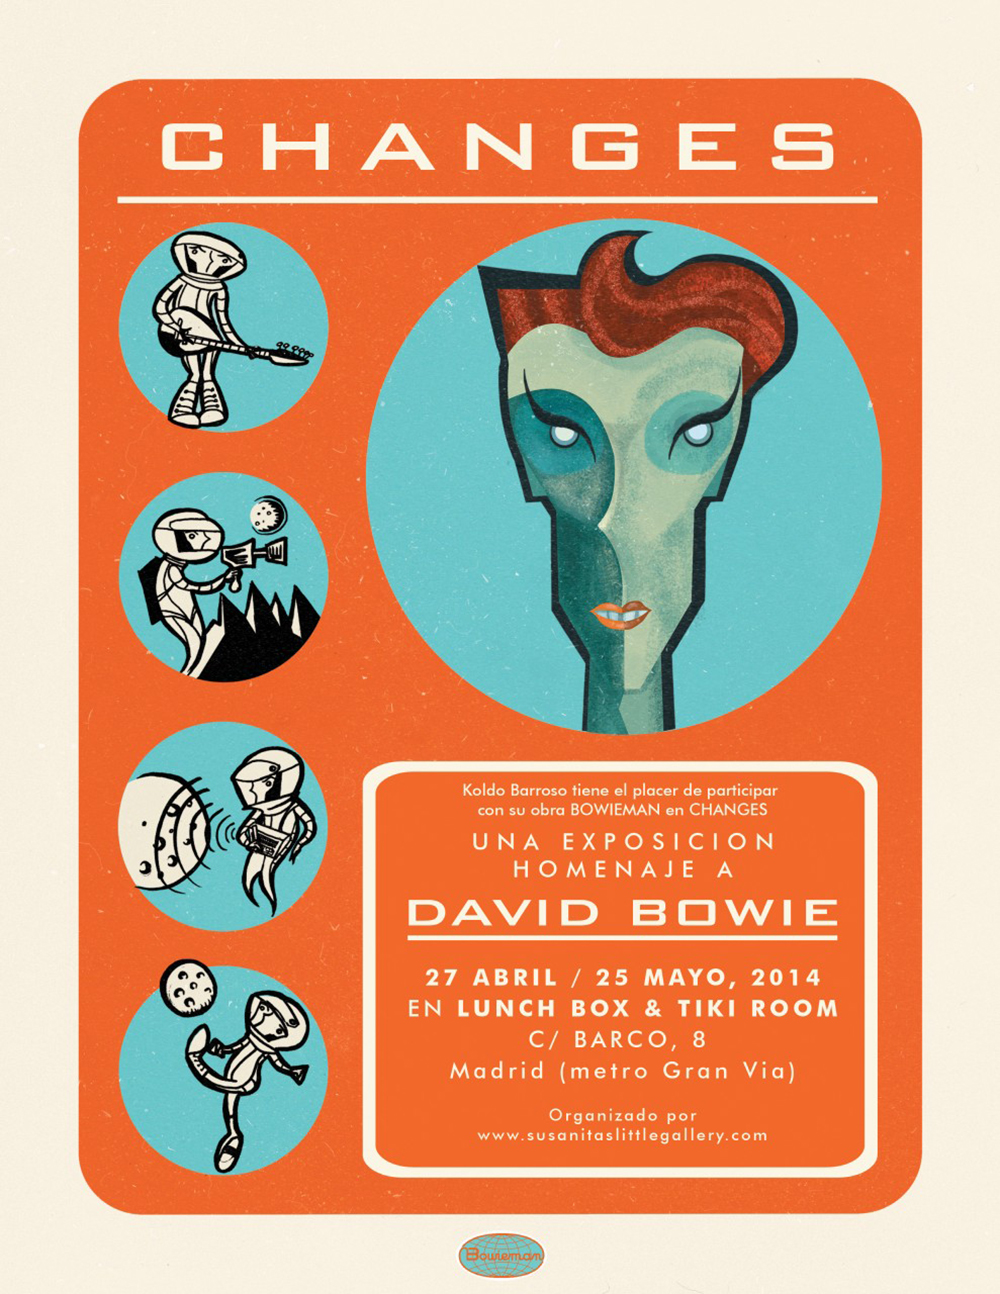 David Bowie exhibition poster illustration